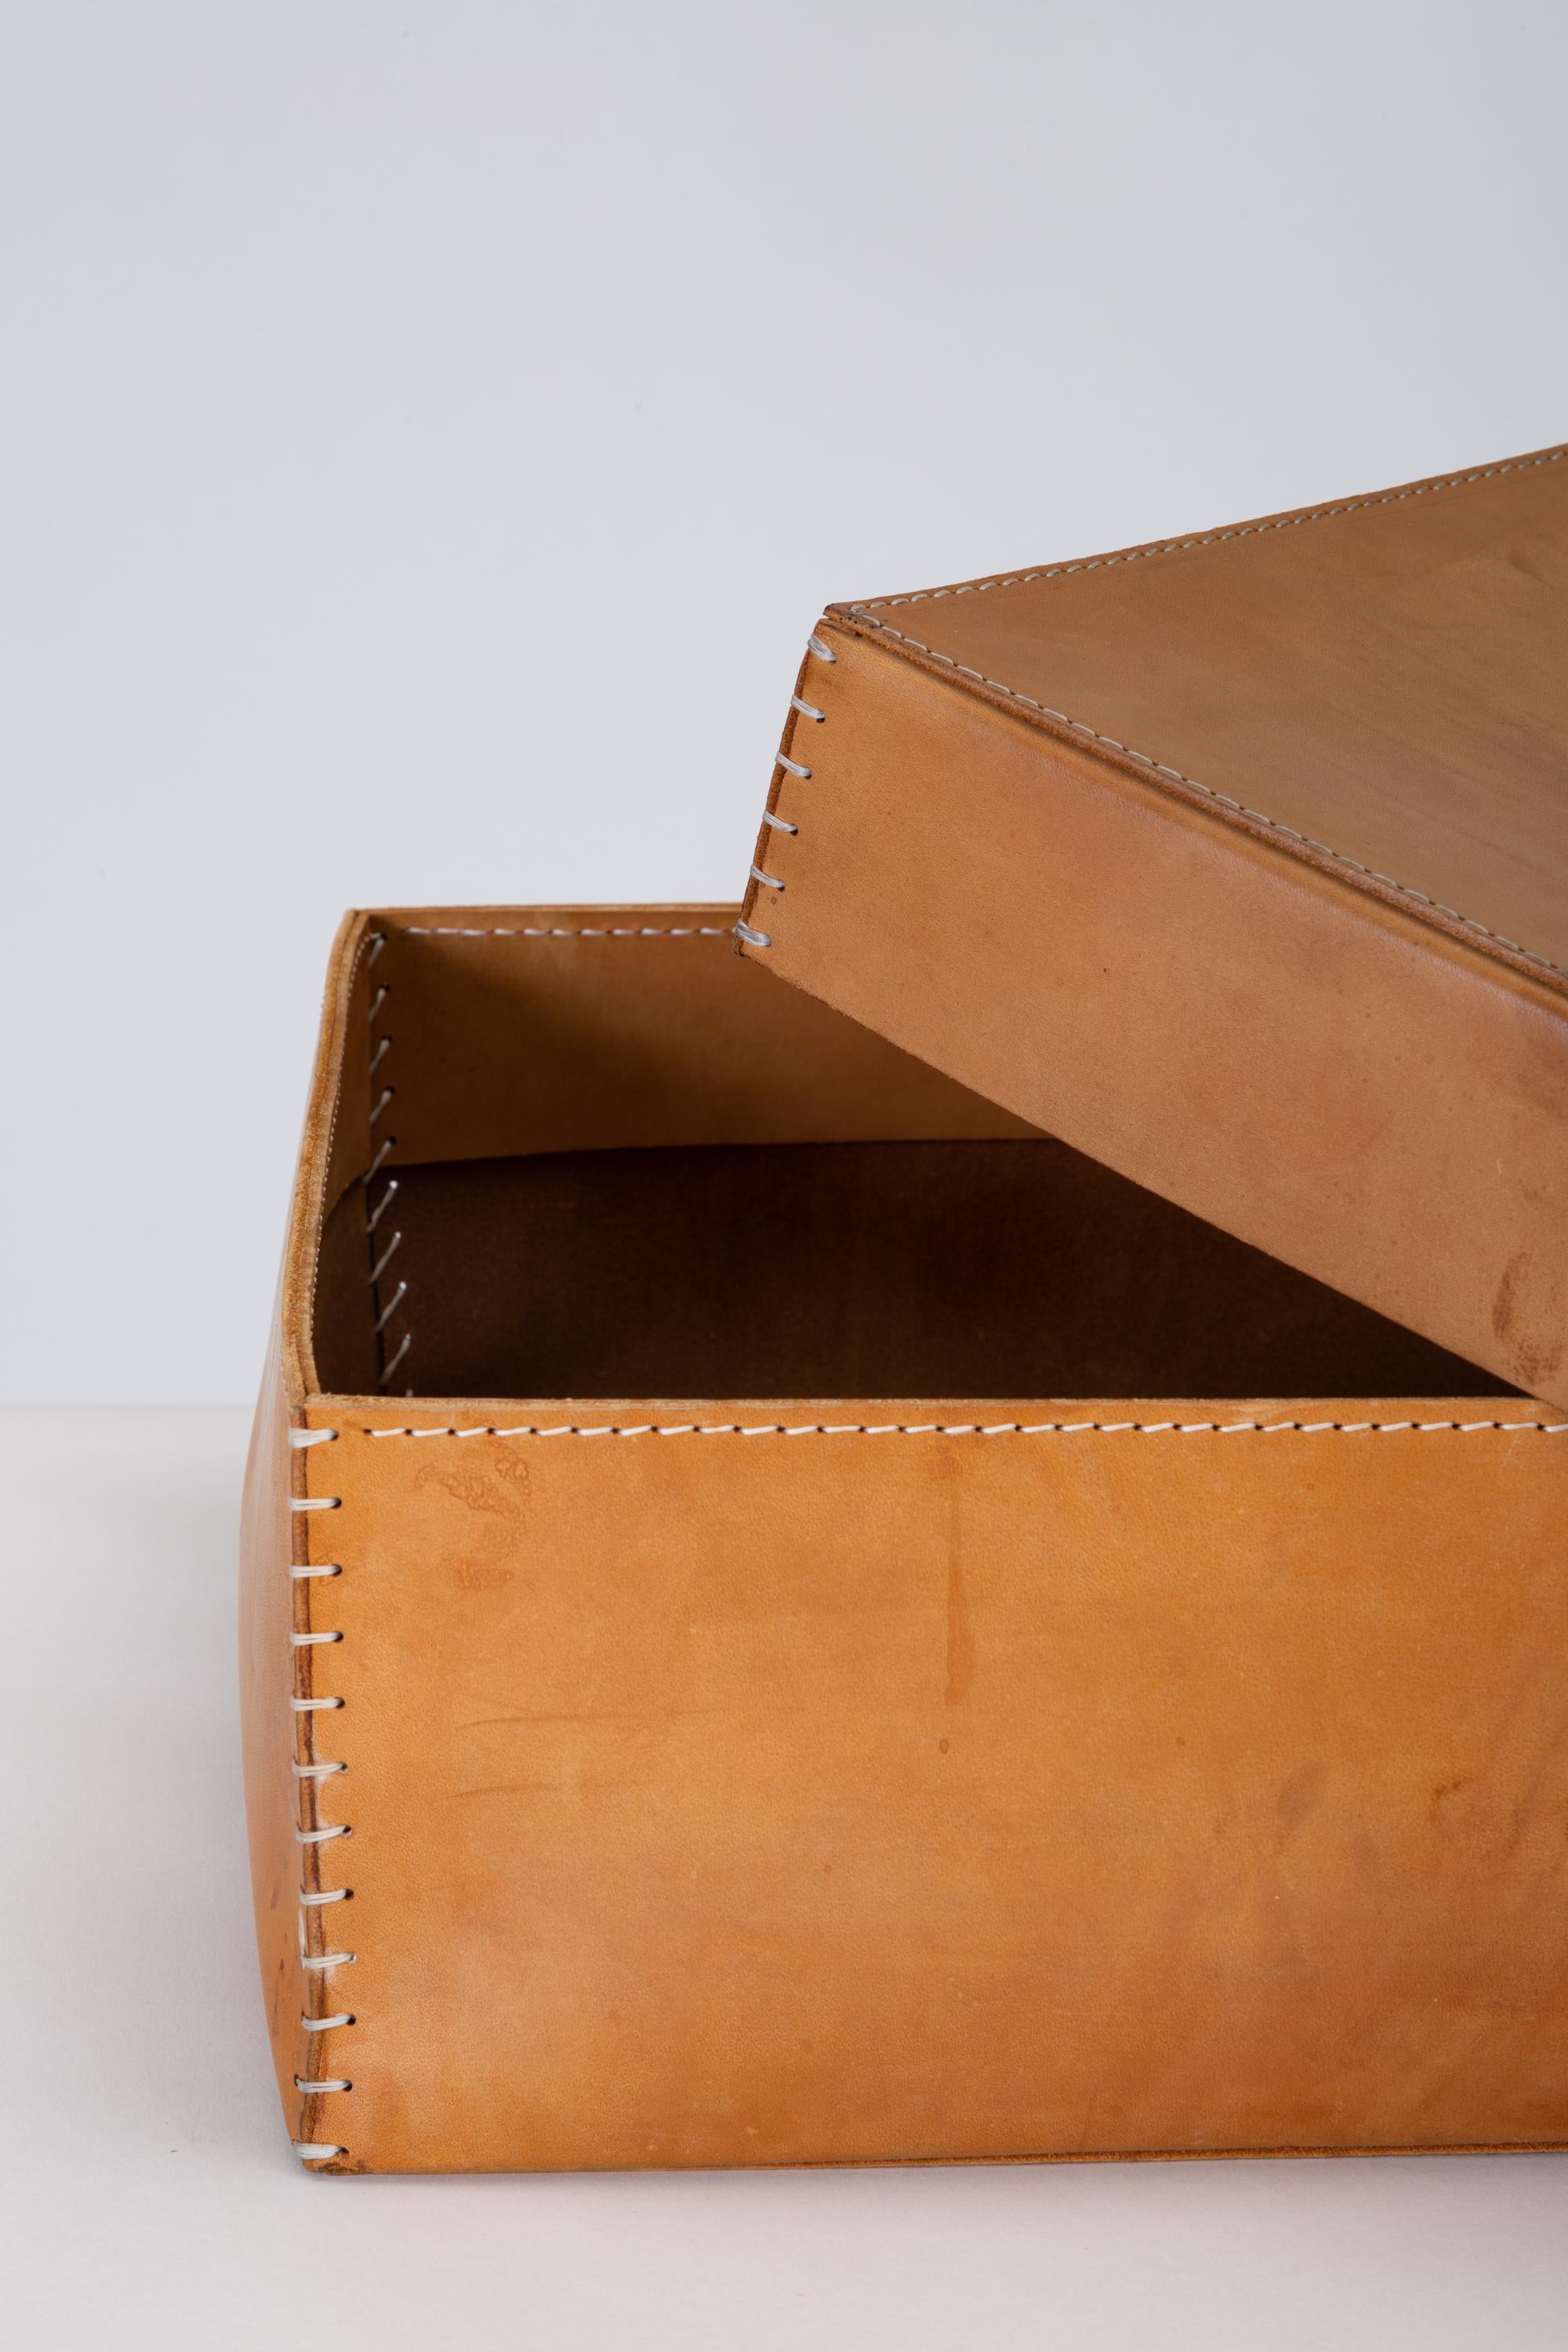 Large Leather Portfolio Box by Arte & Cuoio 1